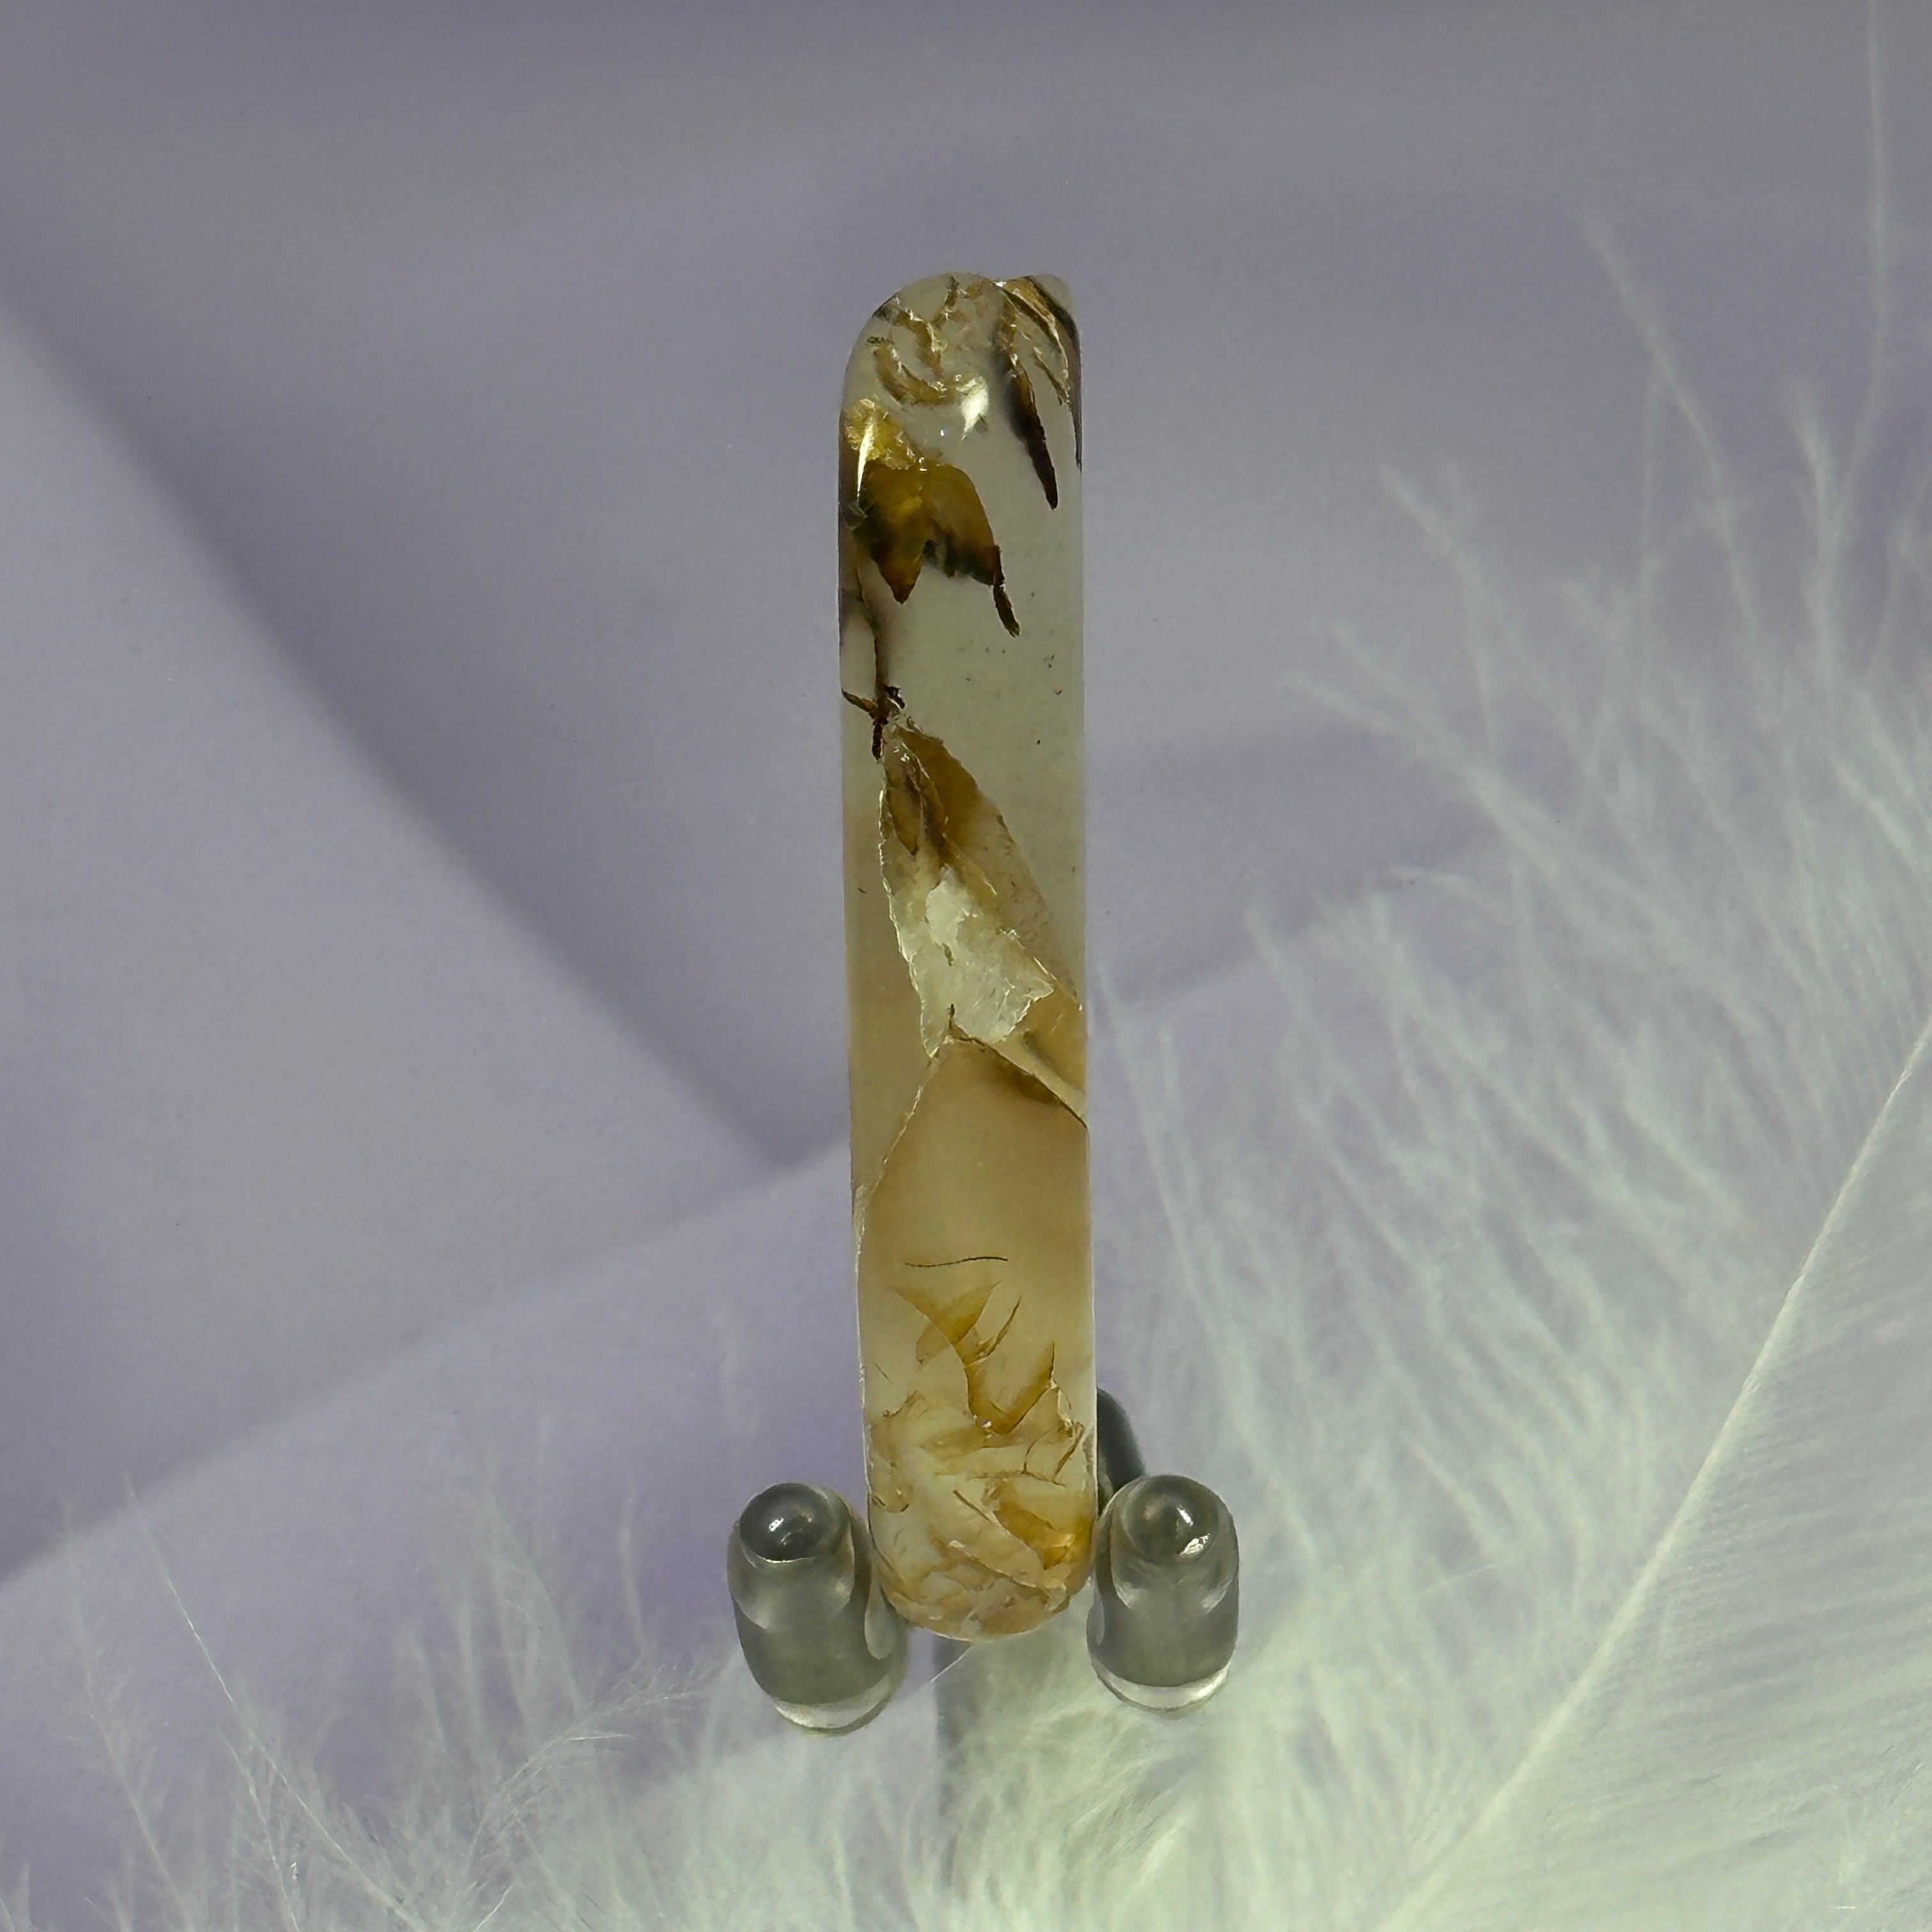 Polished piece Montana Moss Agate crystal 9.4g SN53814